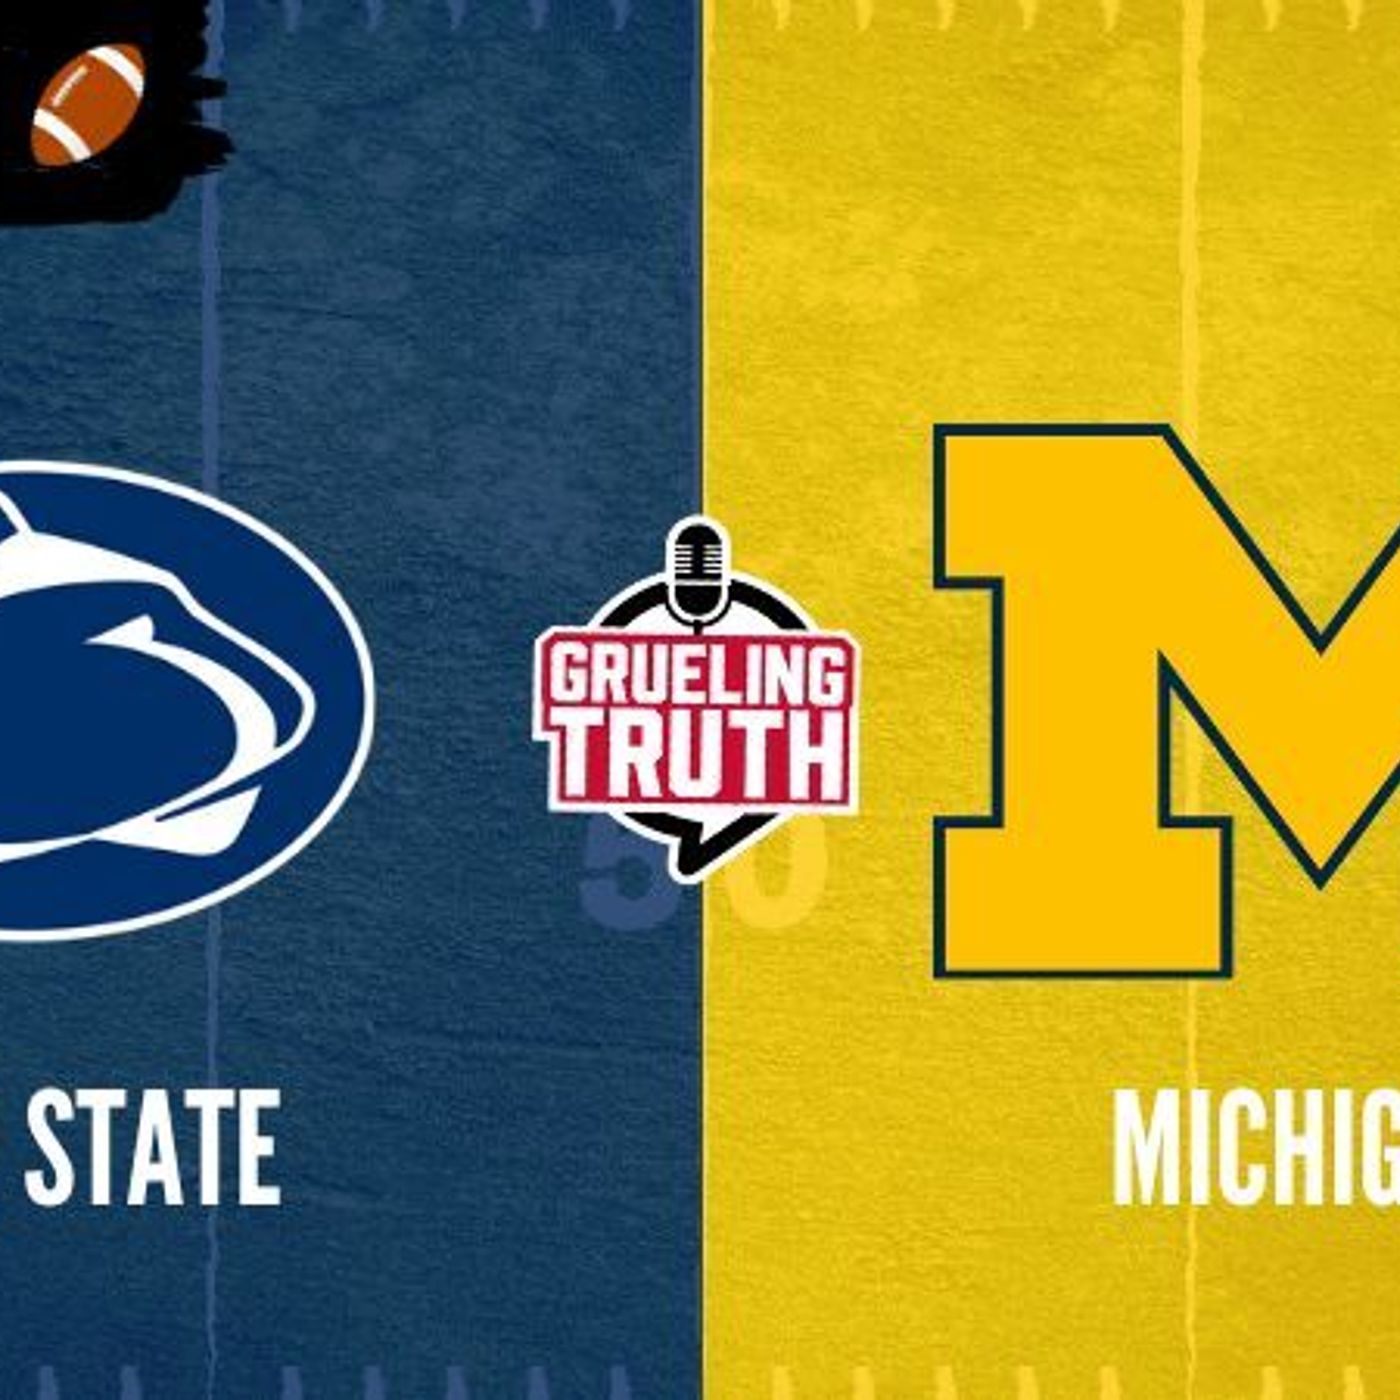 NCAA Football Prediction Show: Michigan vs Penn State